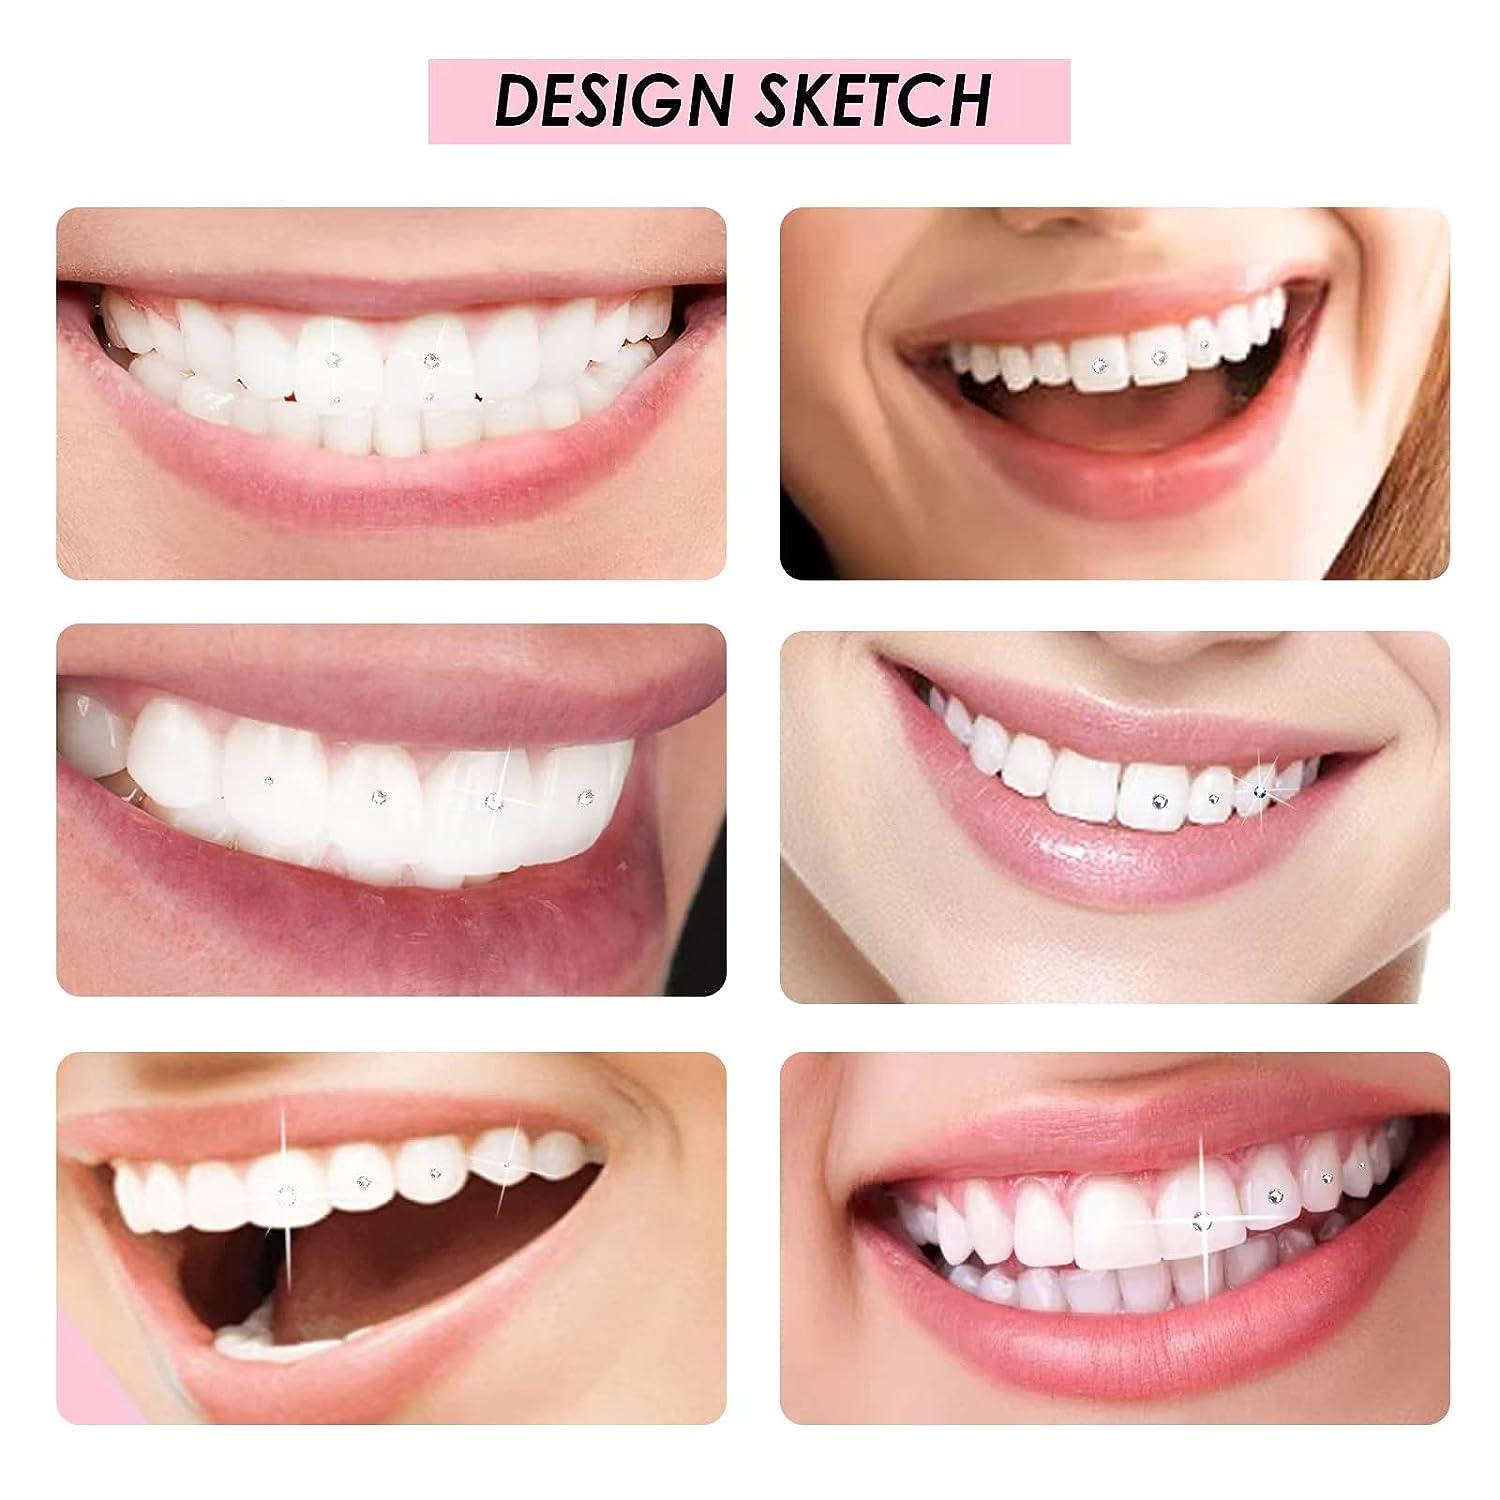 Professional DIY Tooth Gem Kit, Tooth Gem Starter Qatar